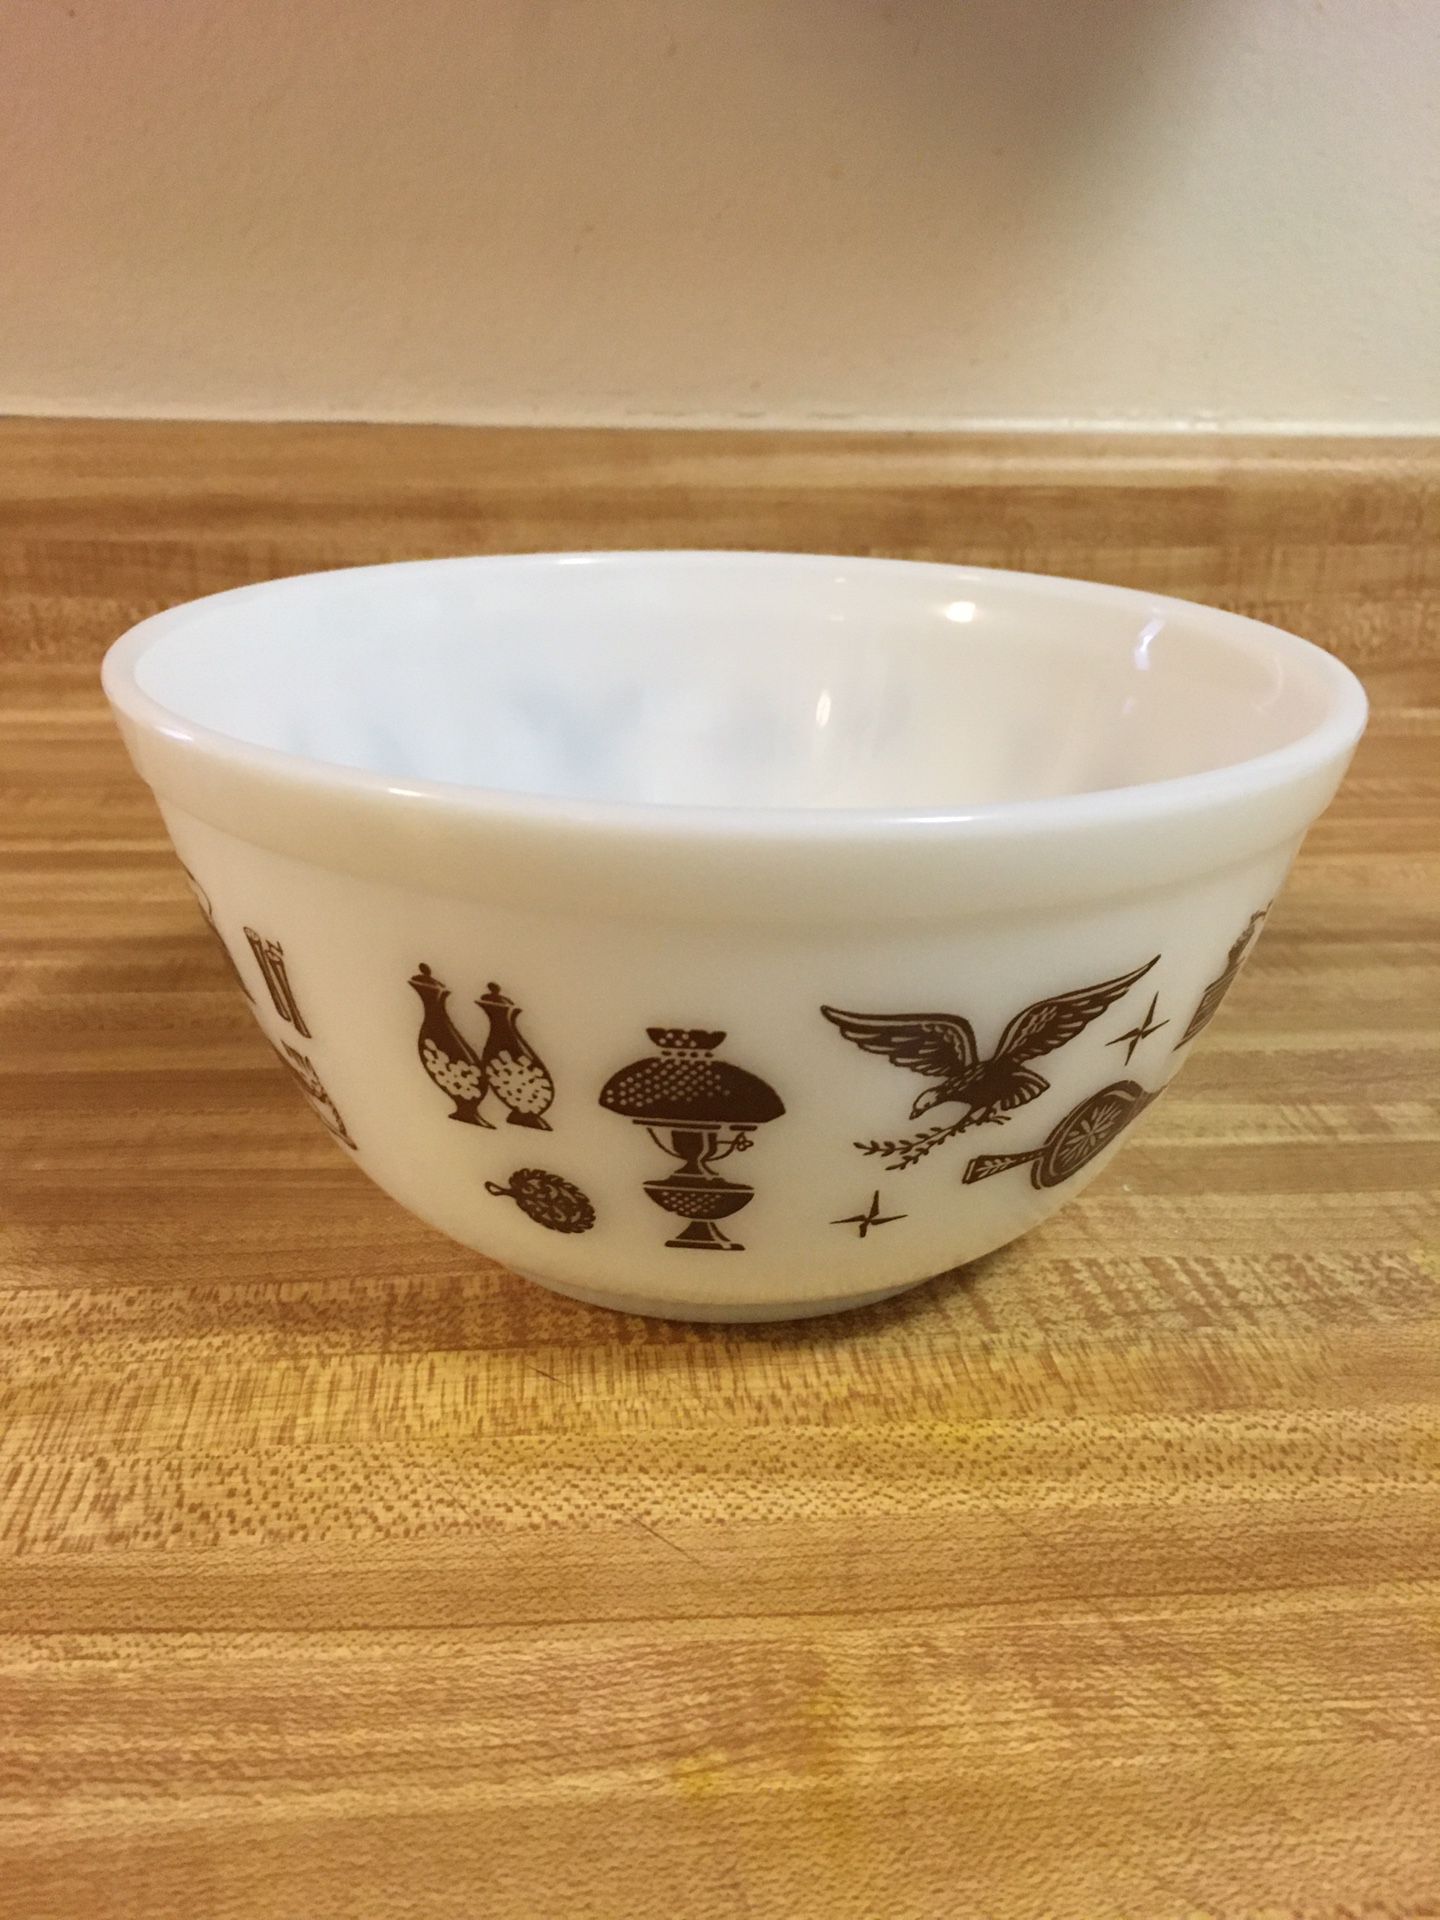 Vintage .5qt Pyrex Early American bowl